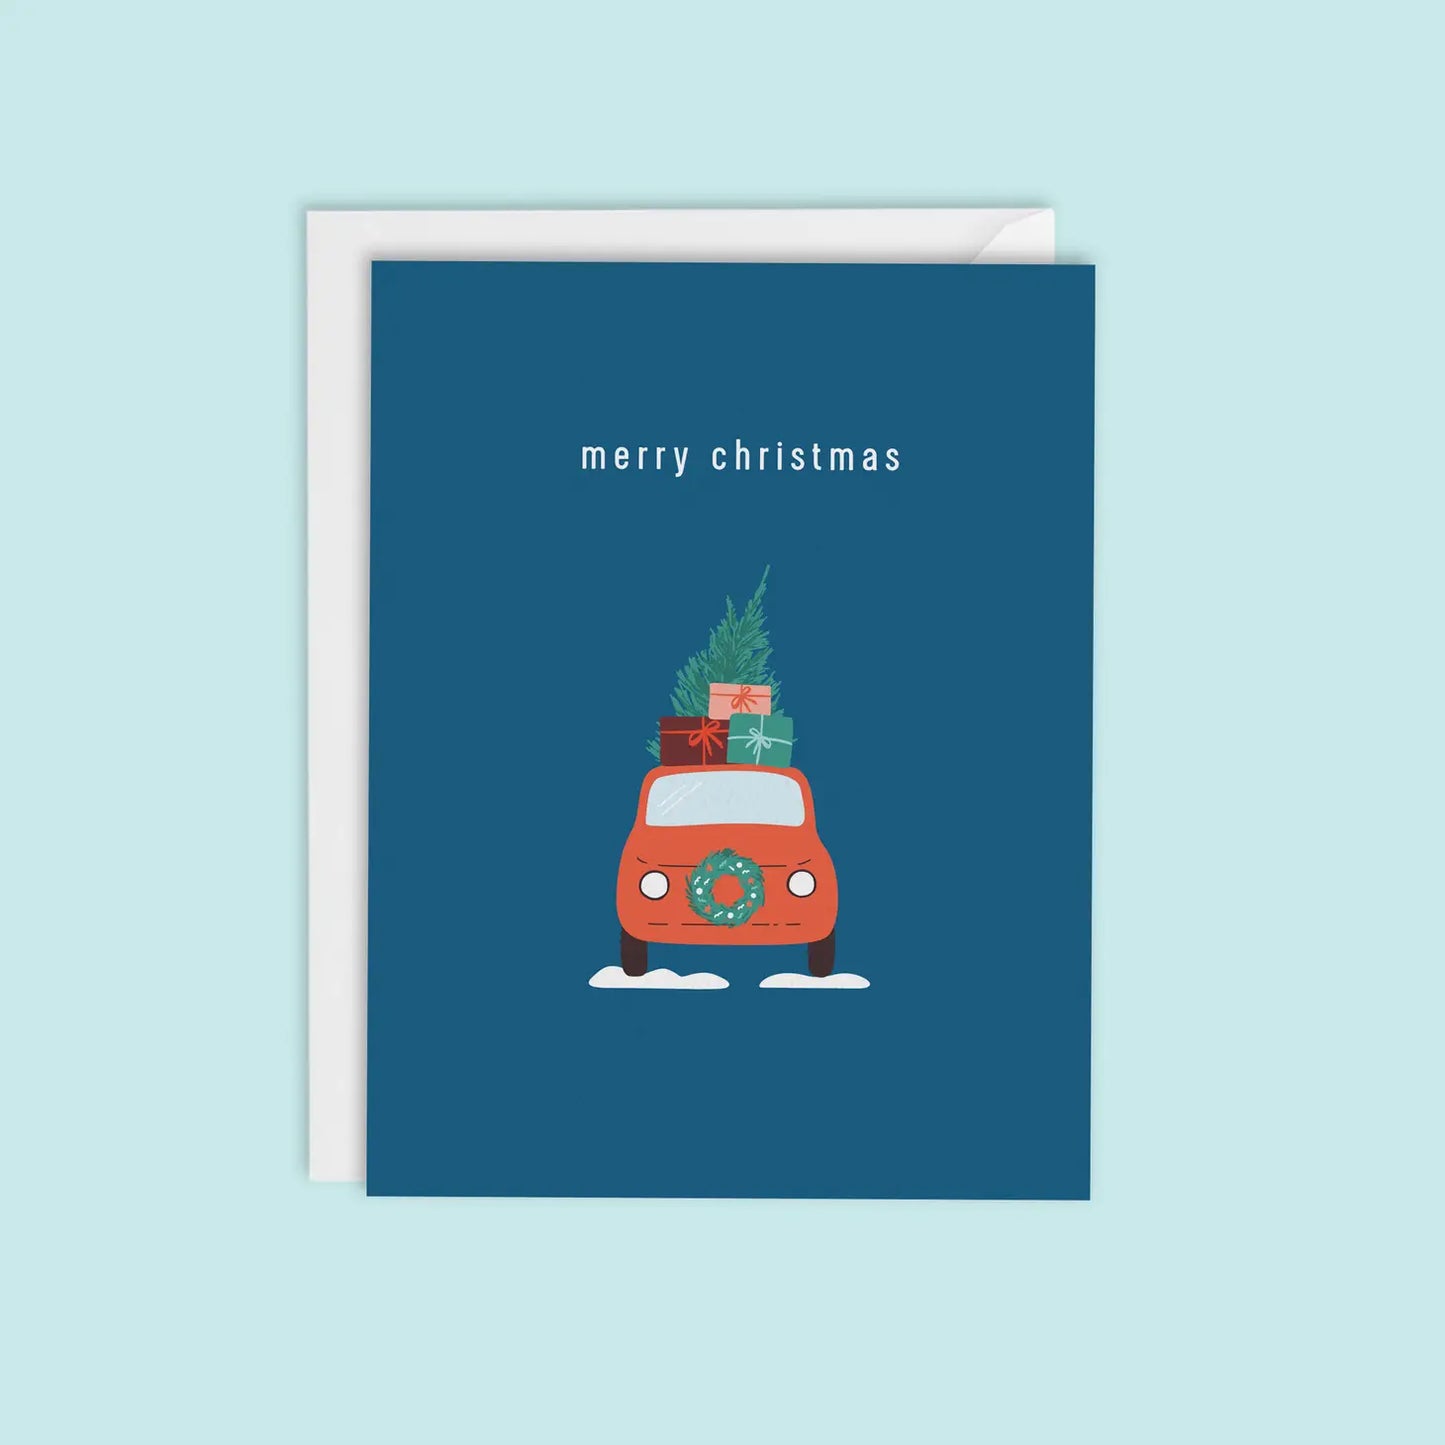 Merry Christmas Holiday Card with Christmas Tree